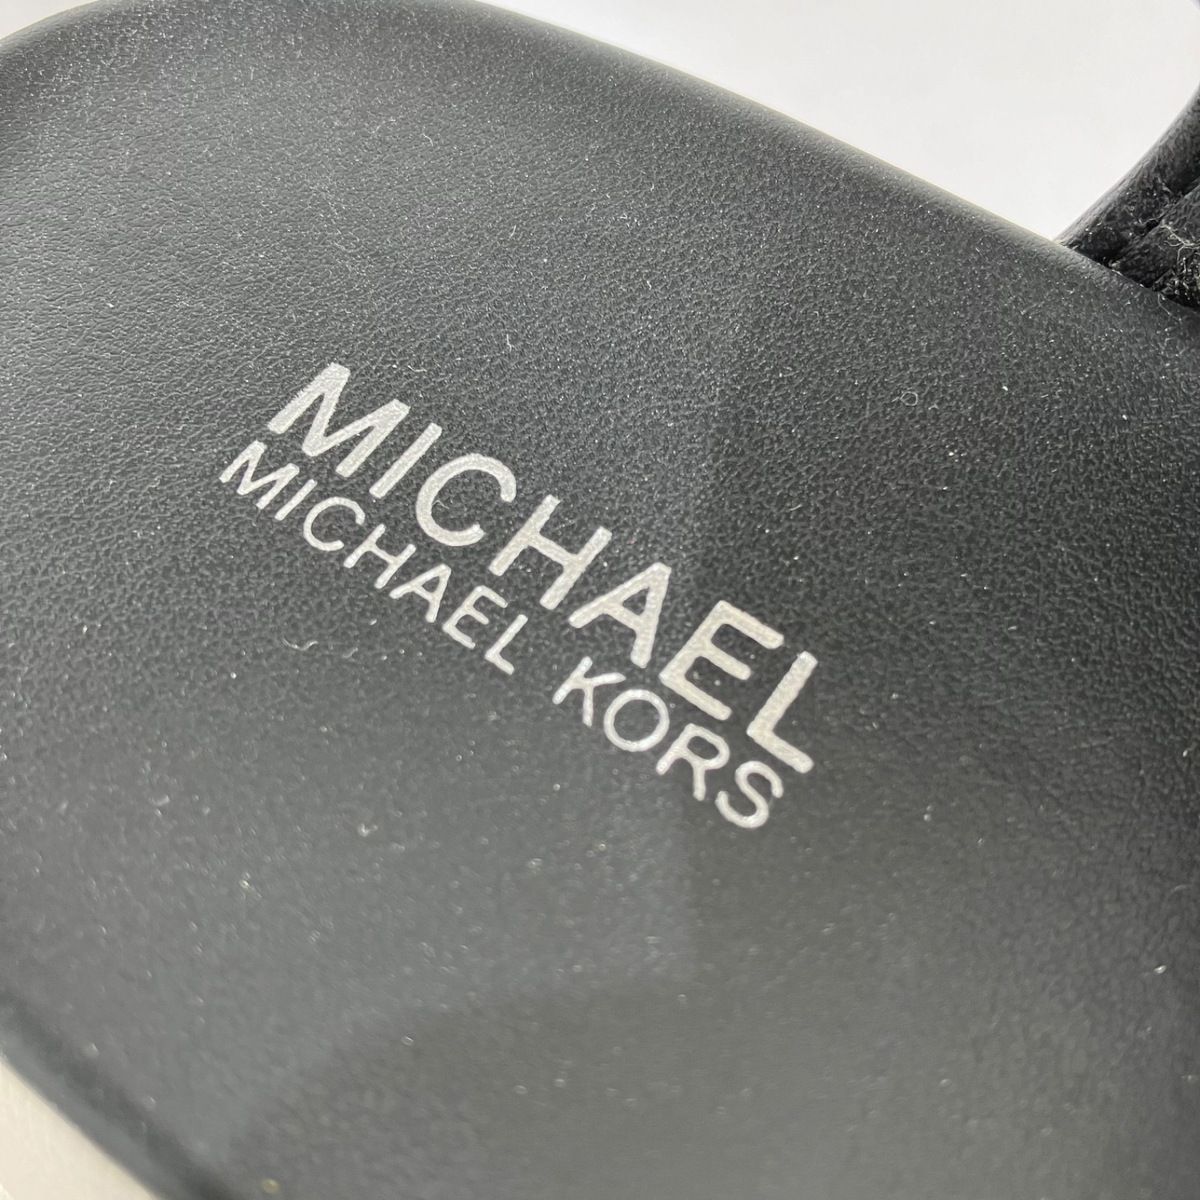 MICHAEL KORS(マイケルコース) サンダル 7 M レディース美品 - 黒×白 